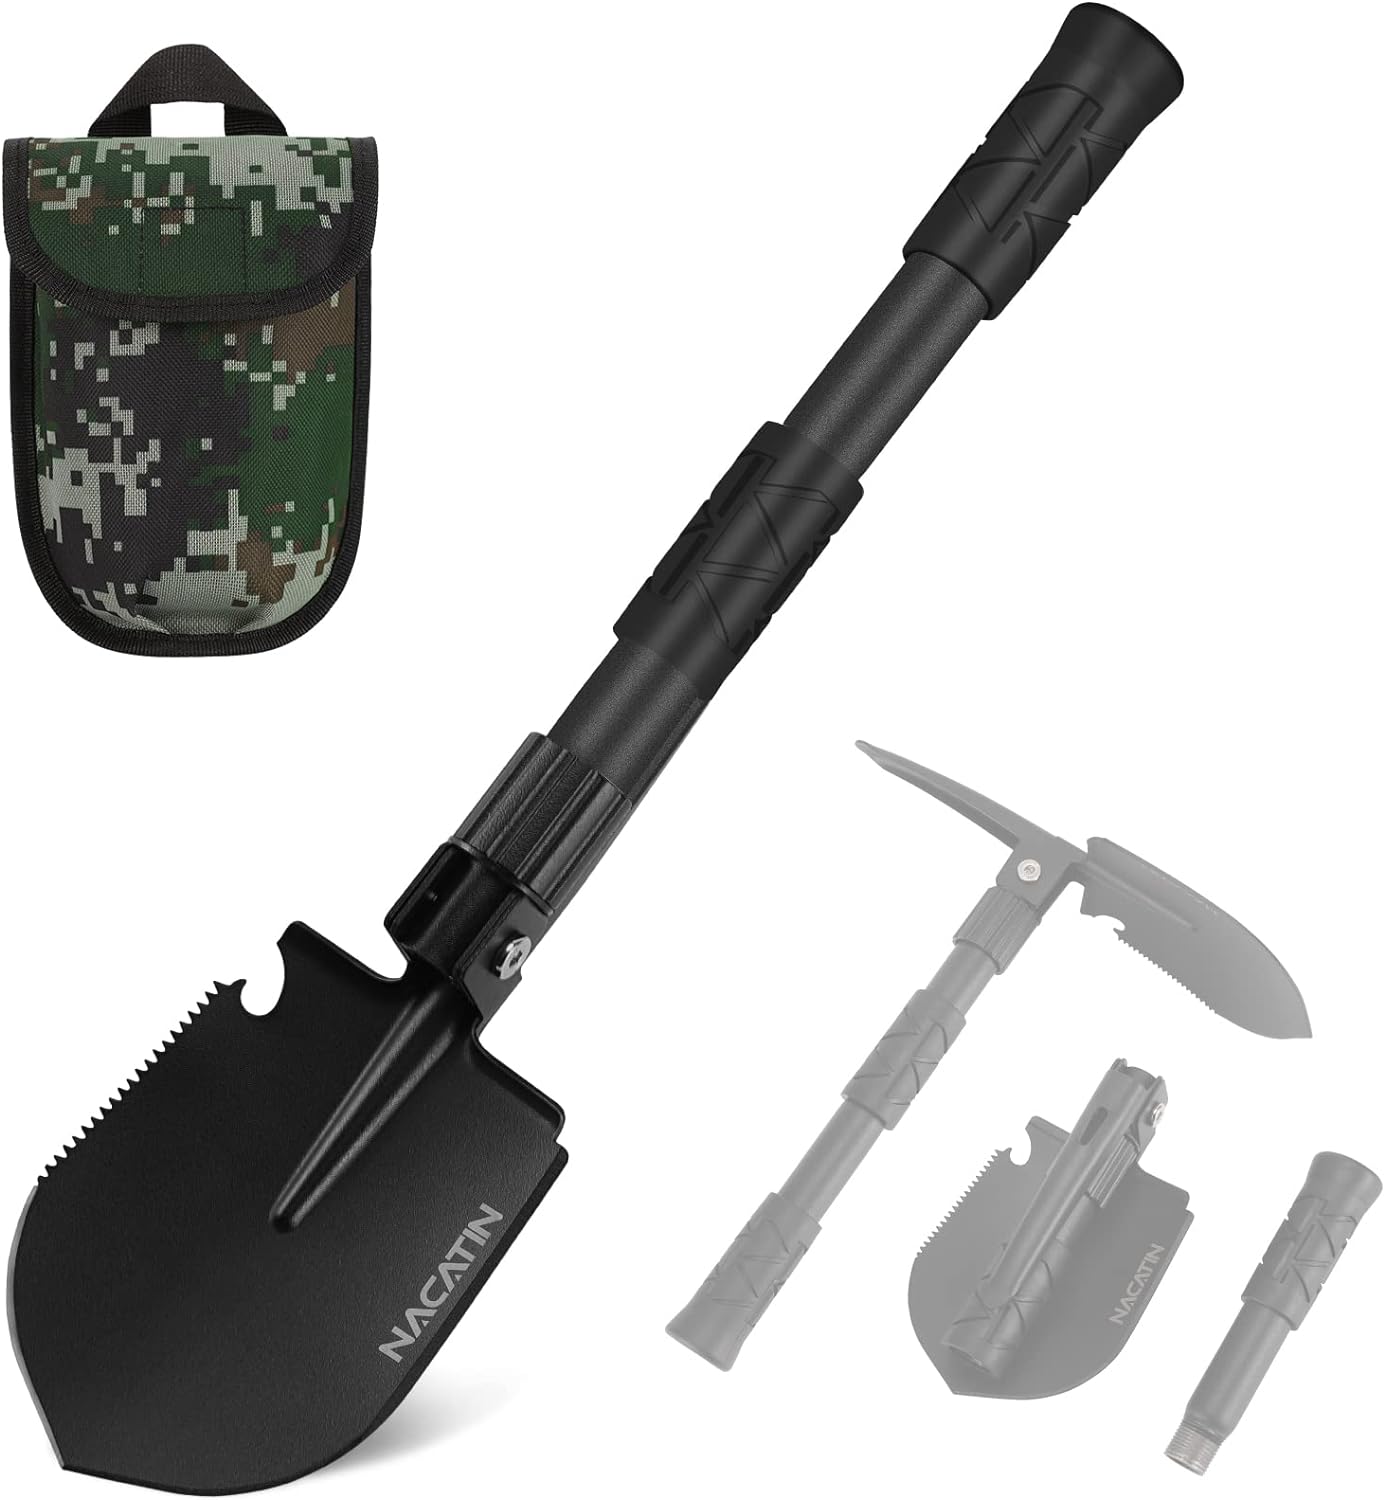 NACATIN Folding Shovel, Camping Military Survival Shovel Portable Tool for Camping, Hiking, Backpacking, Car Emergency, Outdoor, Gardening, Trenching